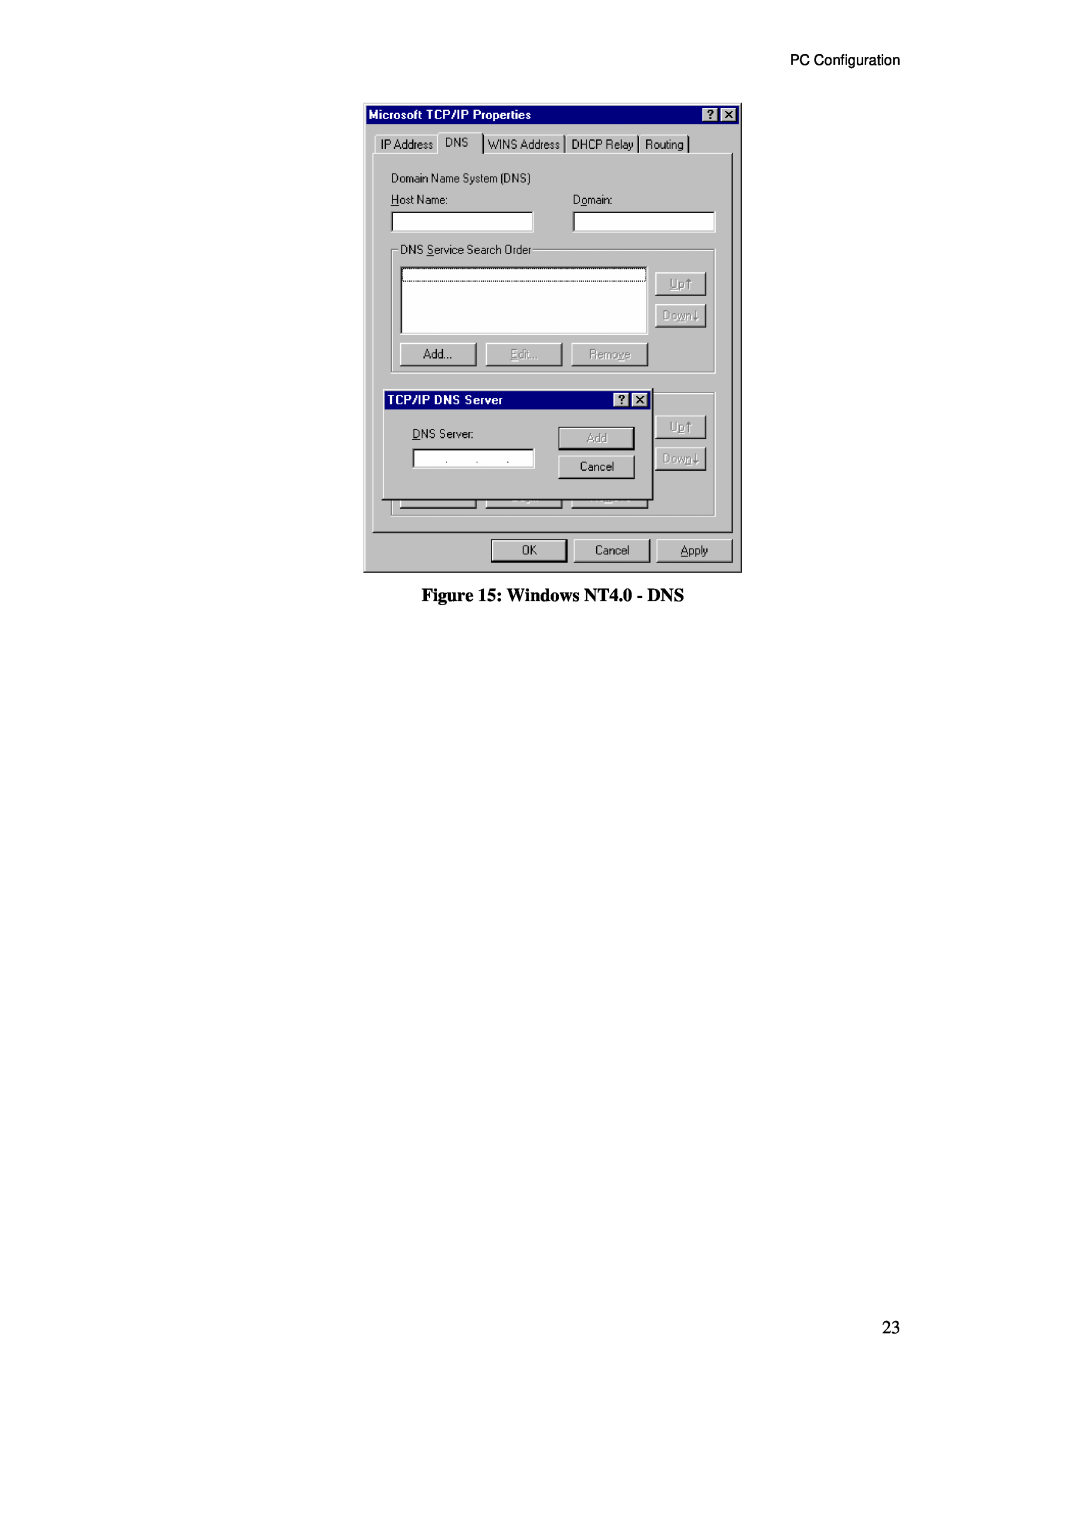 TRENDnet BRV204 manual Windows NT4.0 - DNS, PC Configuration 